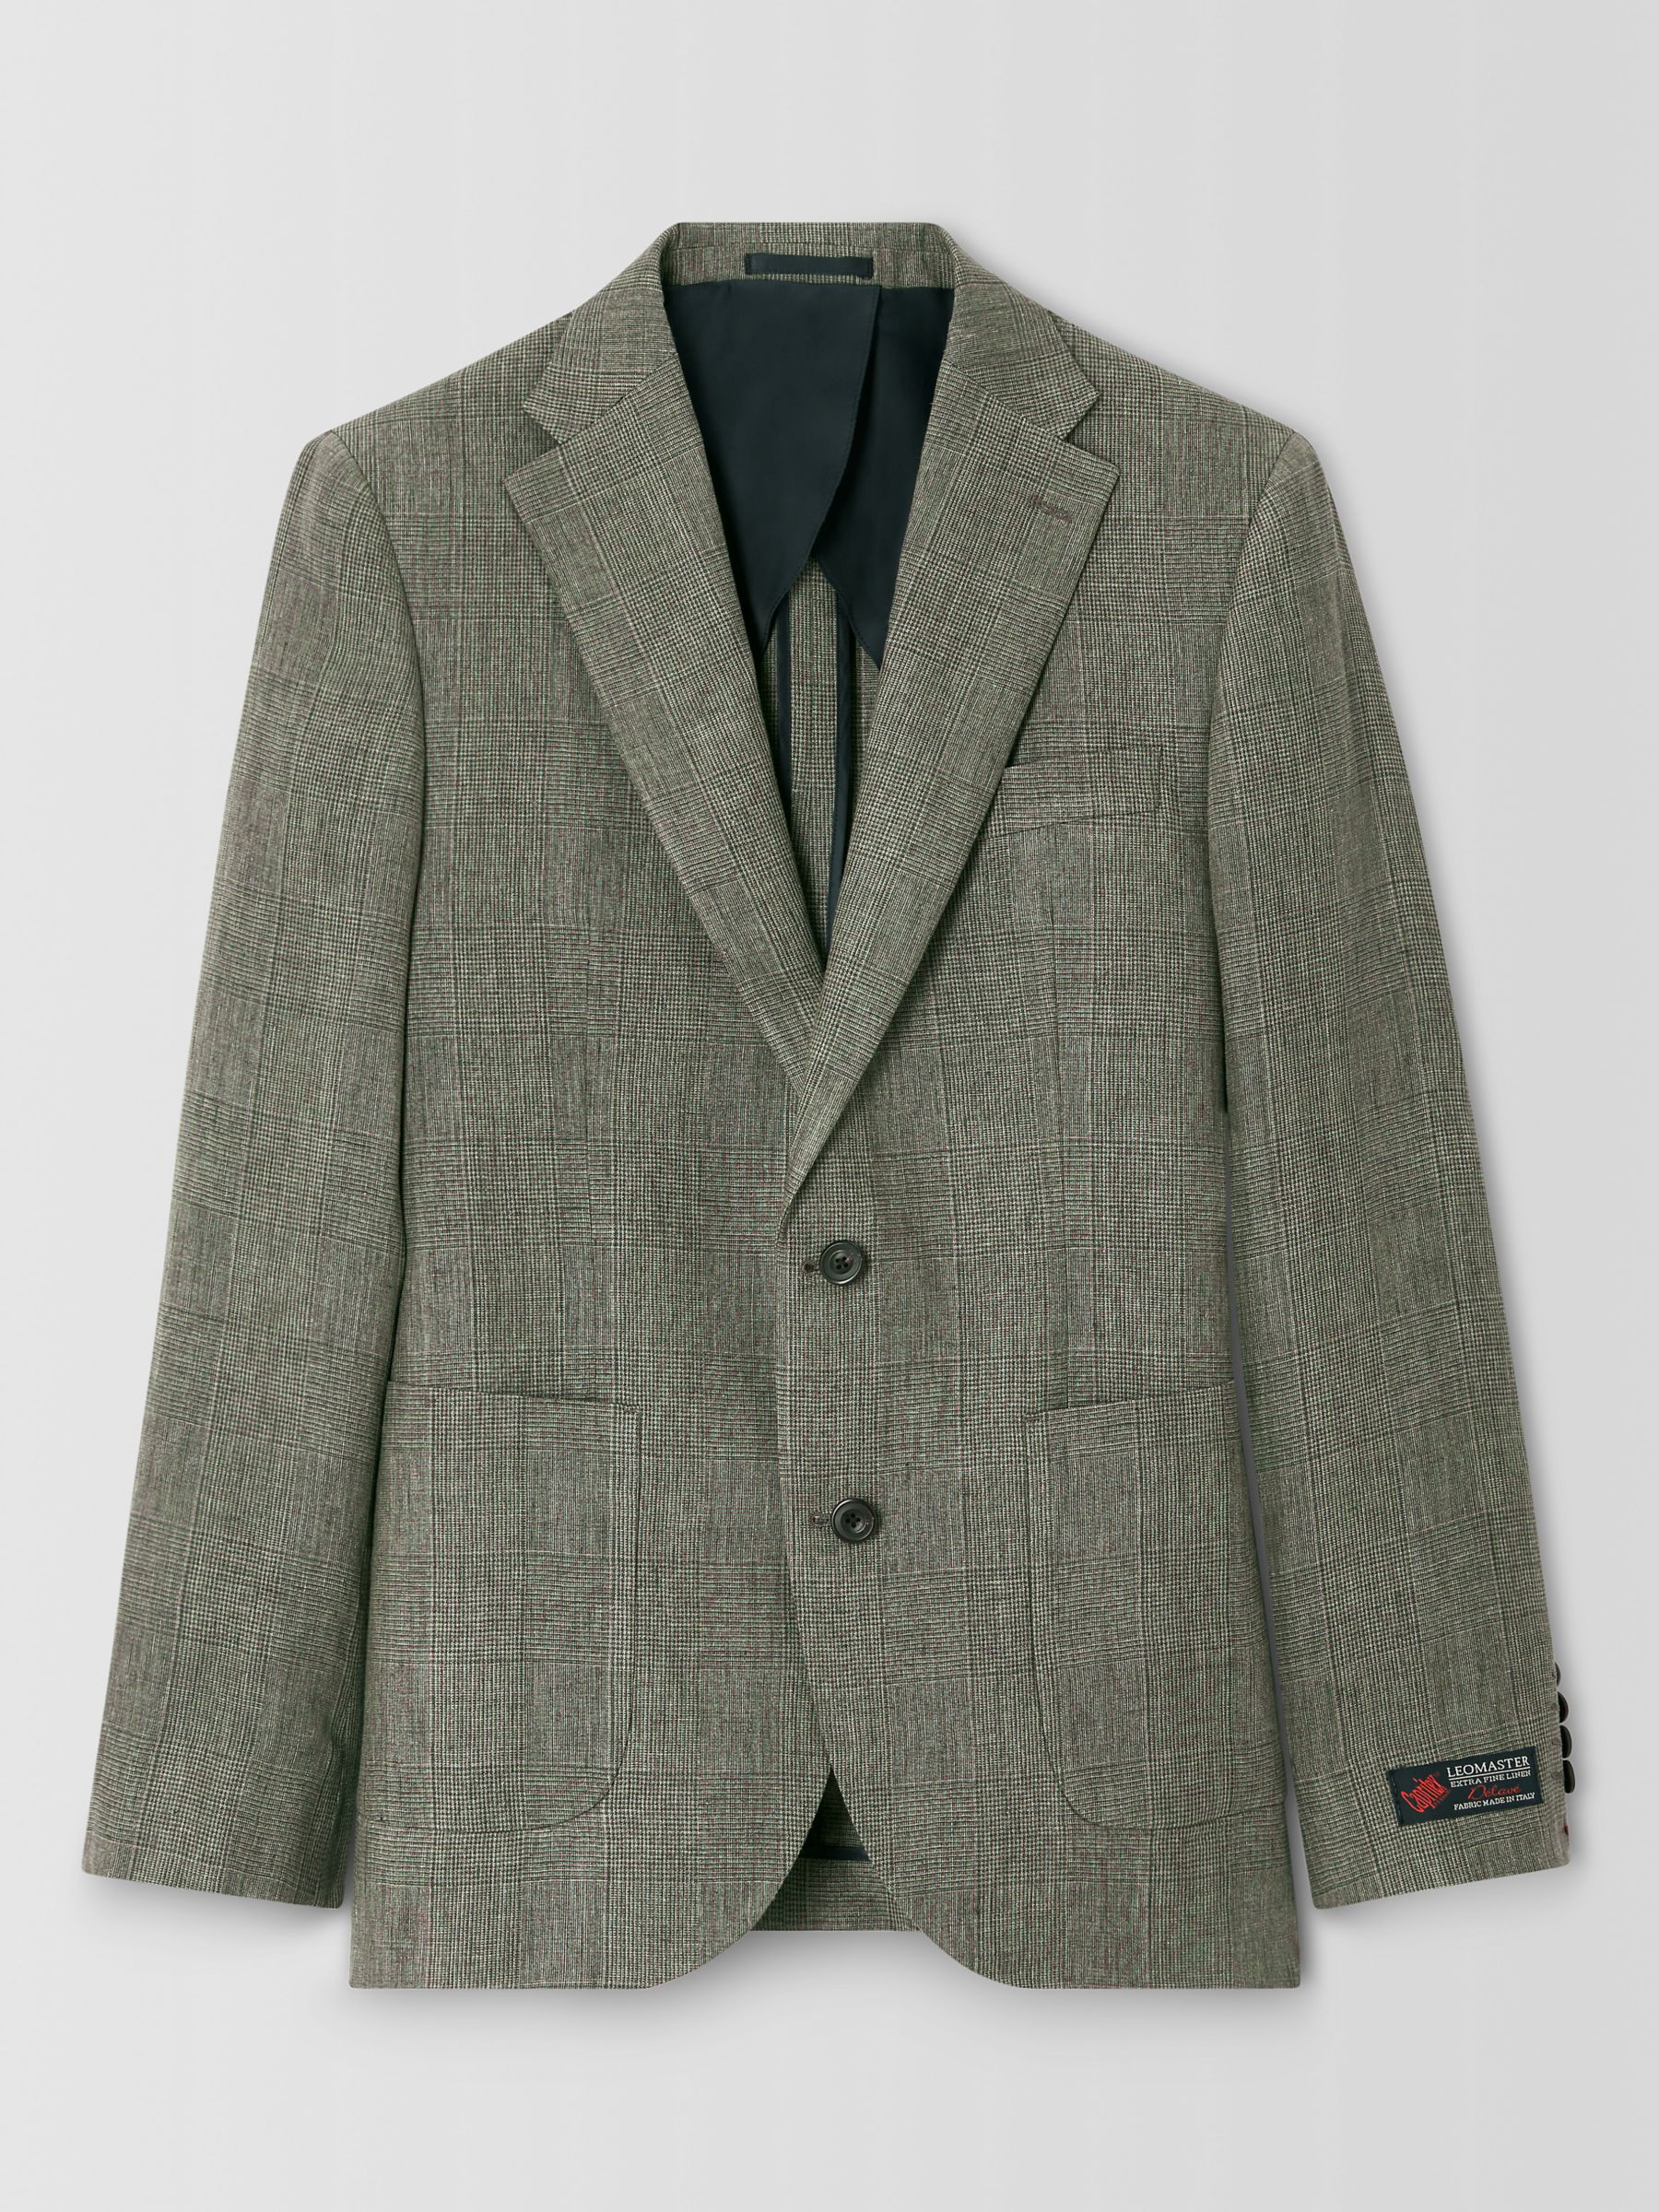 John Lewis Lucca Italian Linen Check Regular Fit Blazer, Khaki Green, 40R